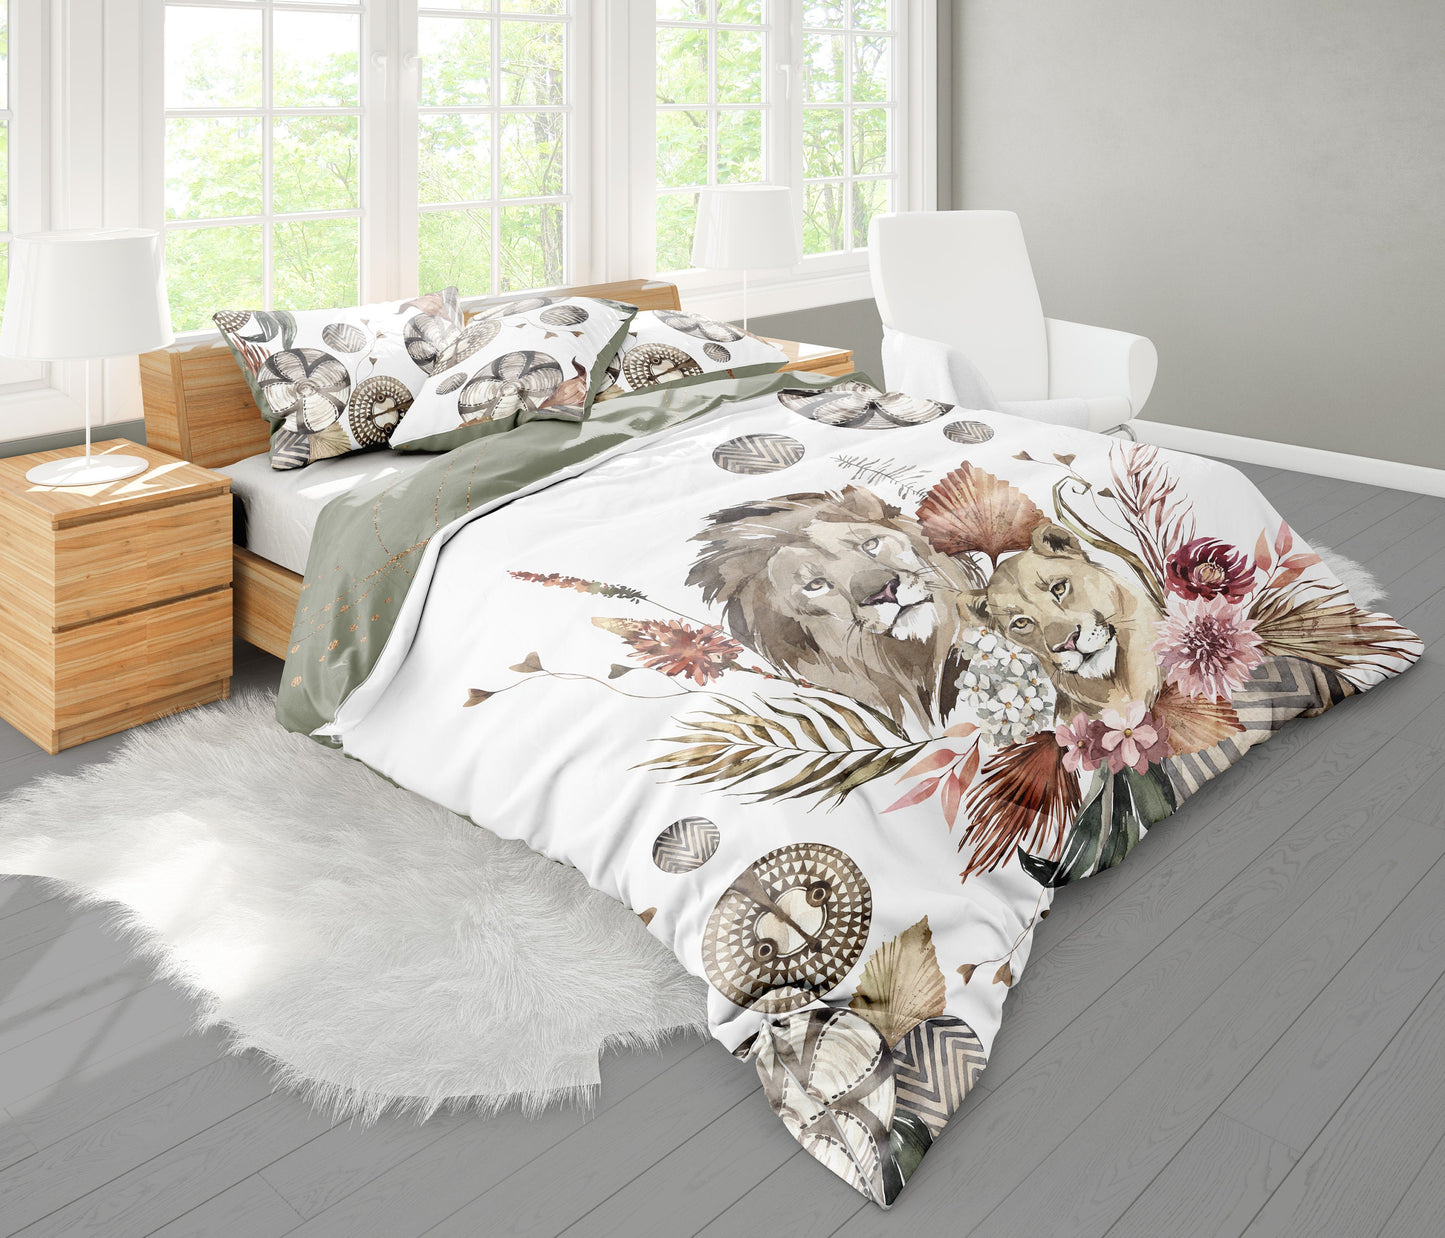 Romantic Safari-style design with watercolour lions Bedding set • 2 sided printed design • Cotton or microfiber fabric • AU, EU, USA